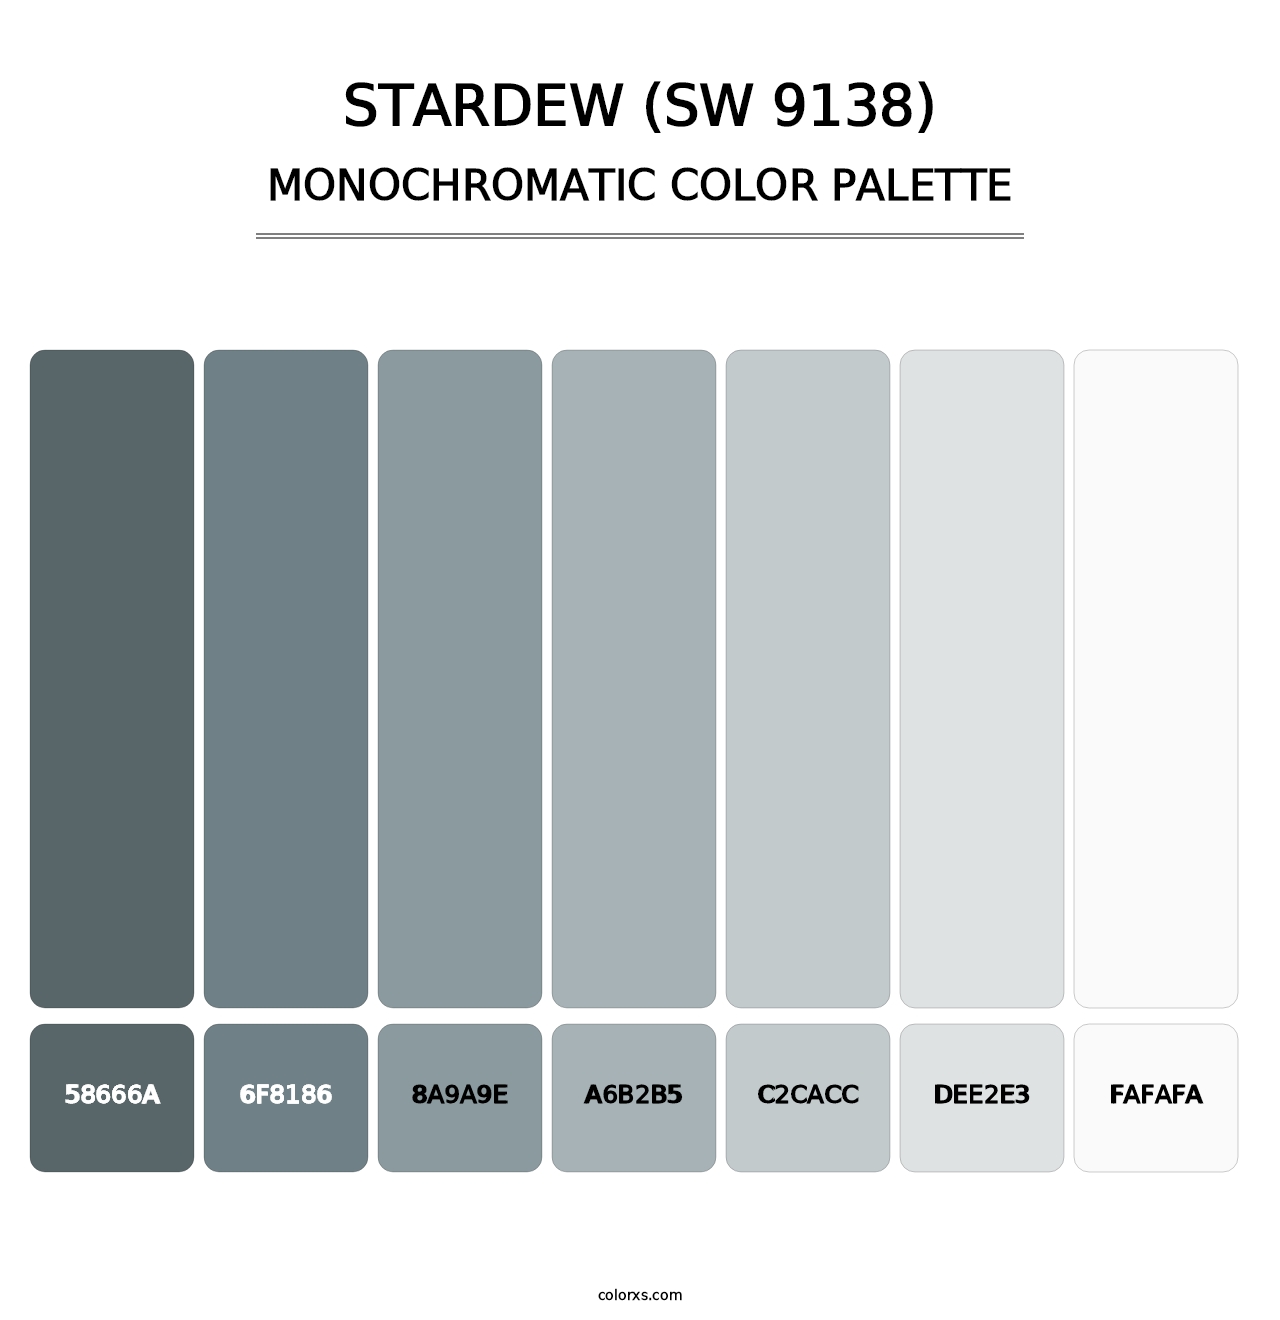 Stardew (SW 9138) - Monochromatic Color Palette